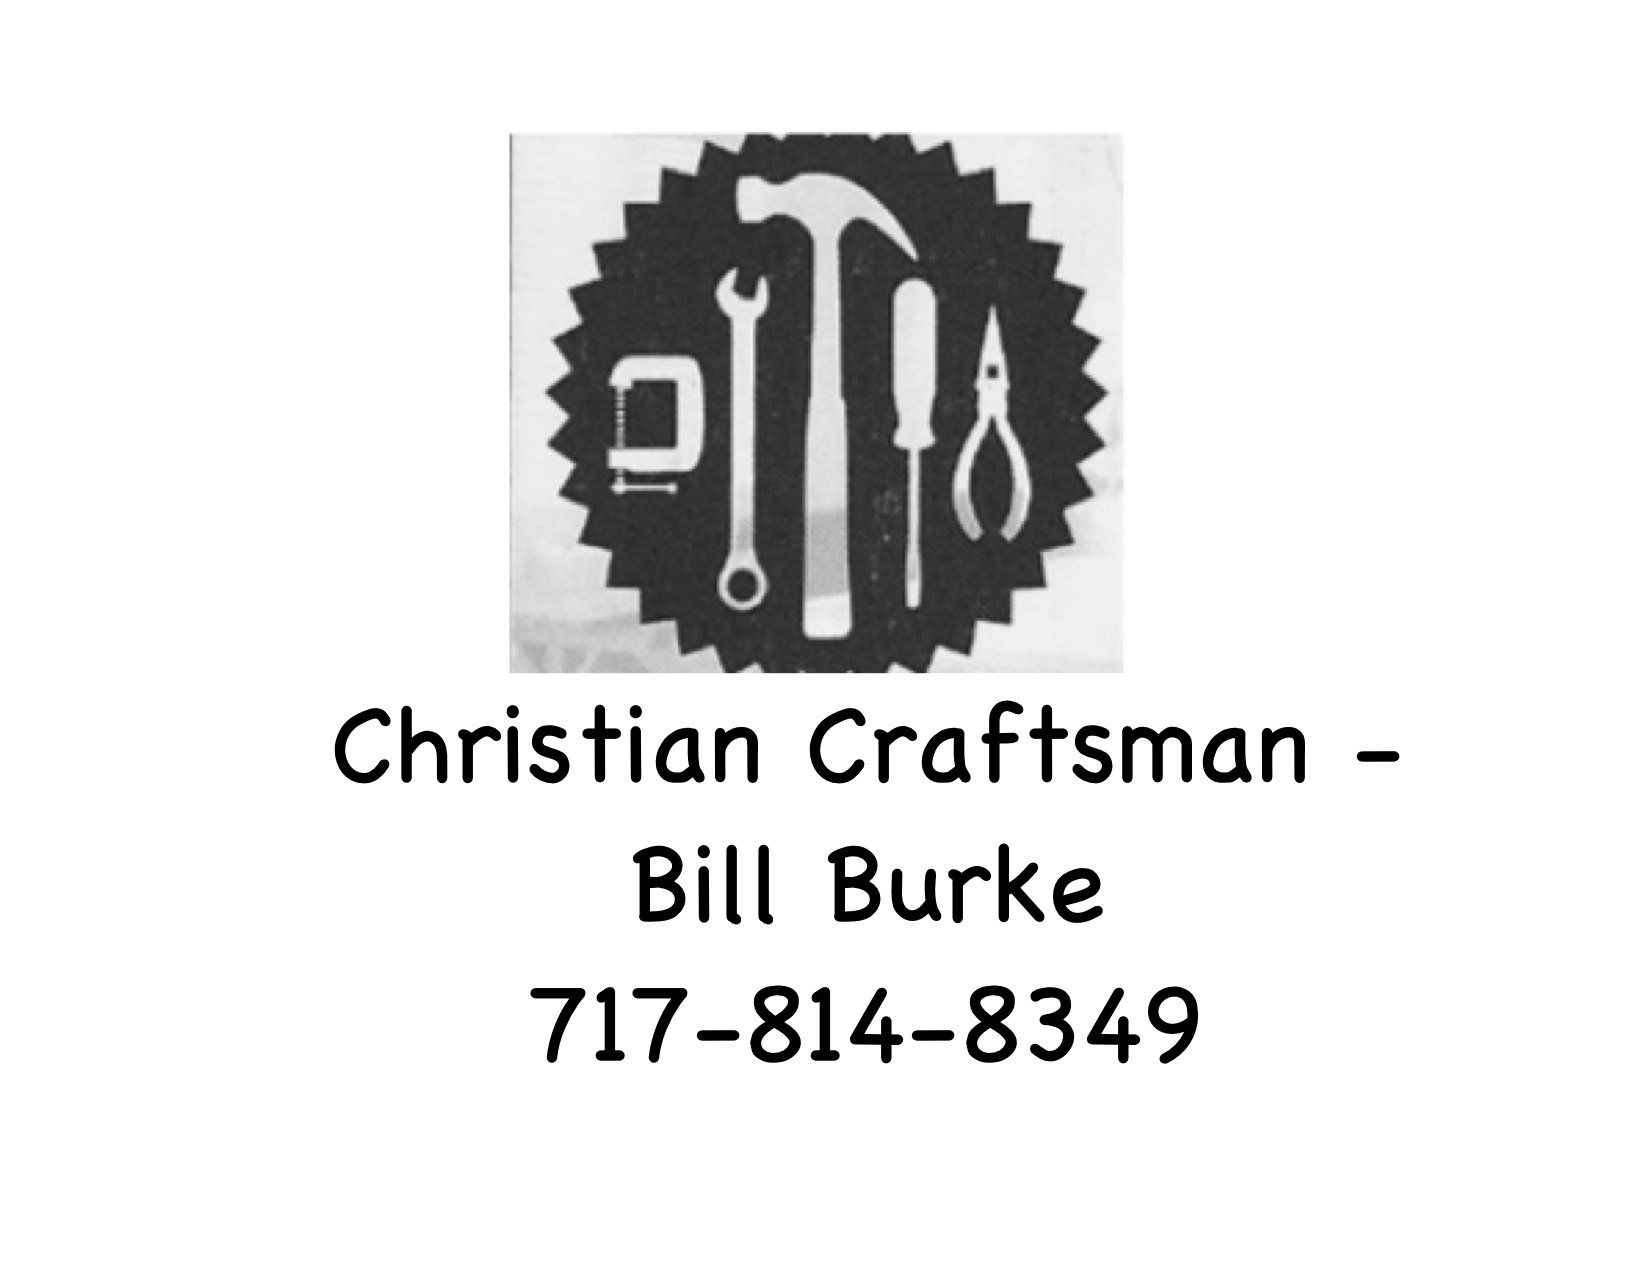 Christian Craftsman Bill Burke